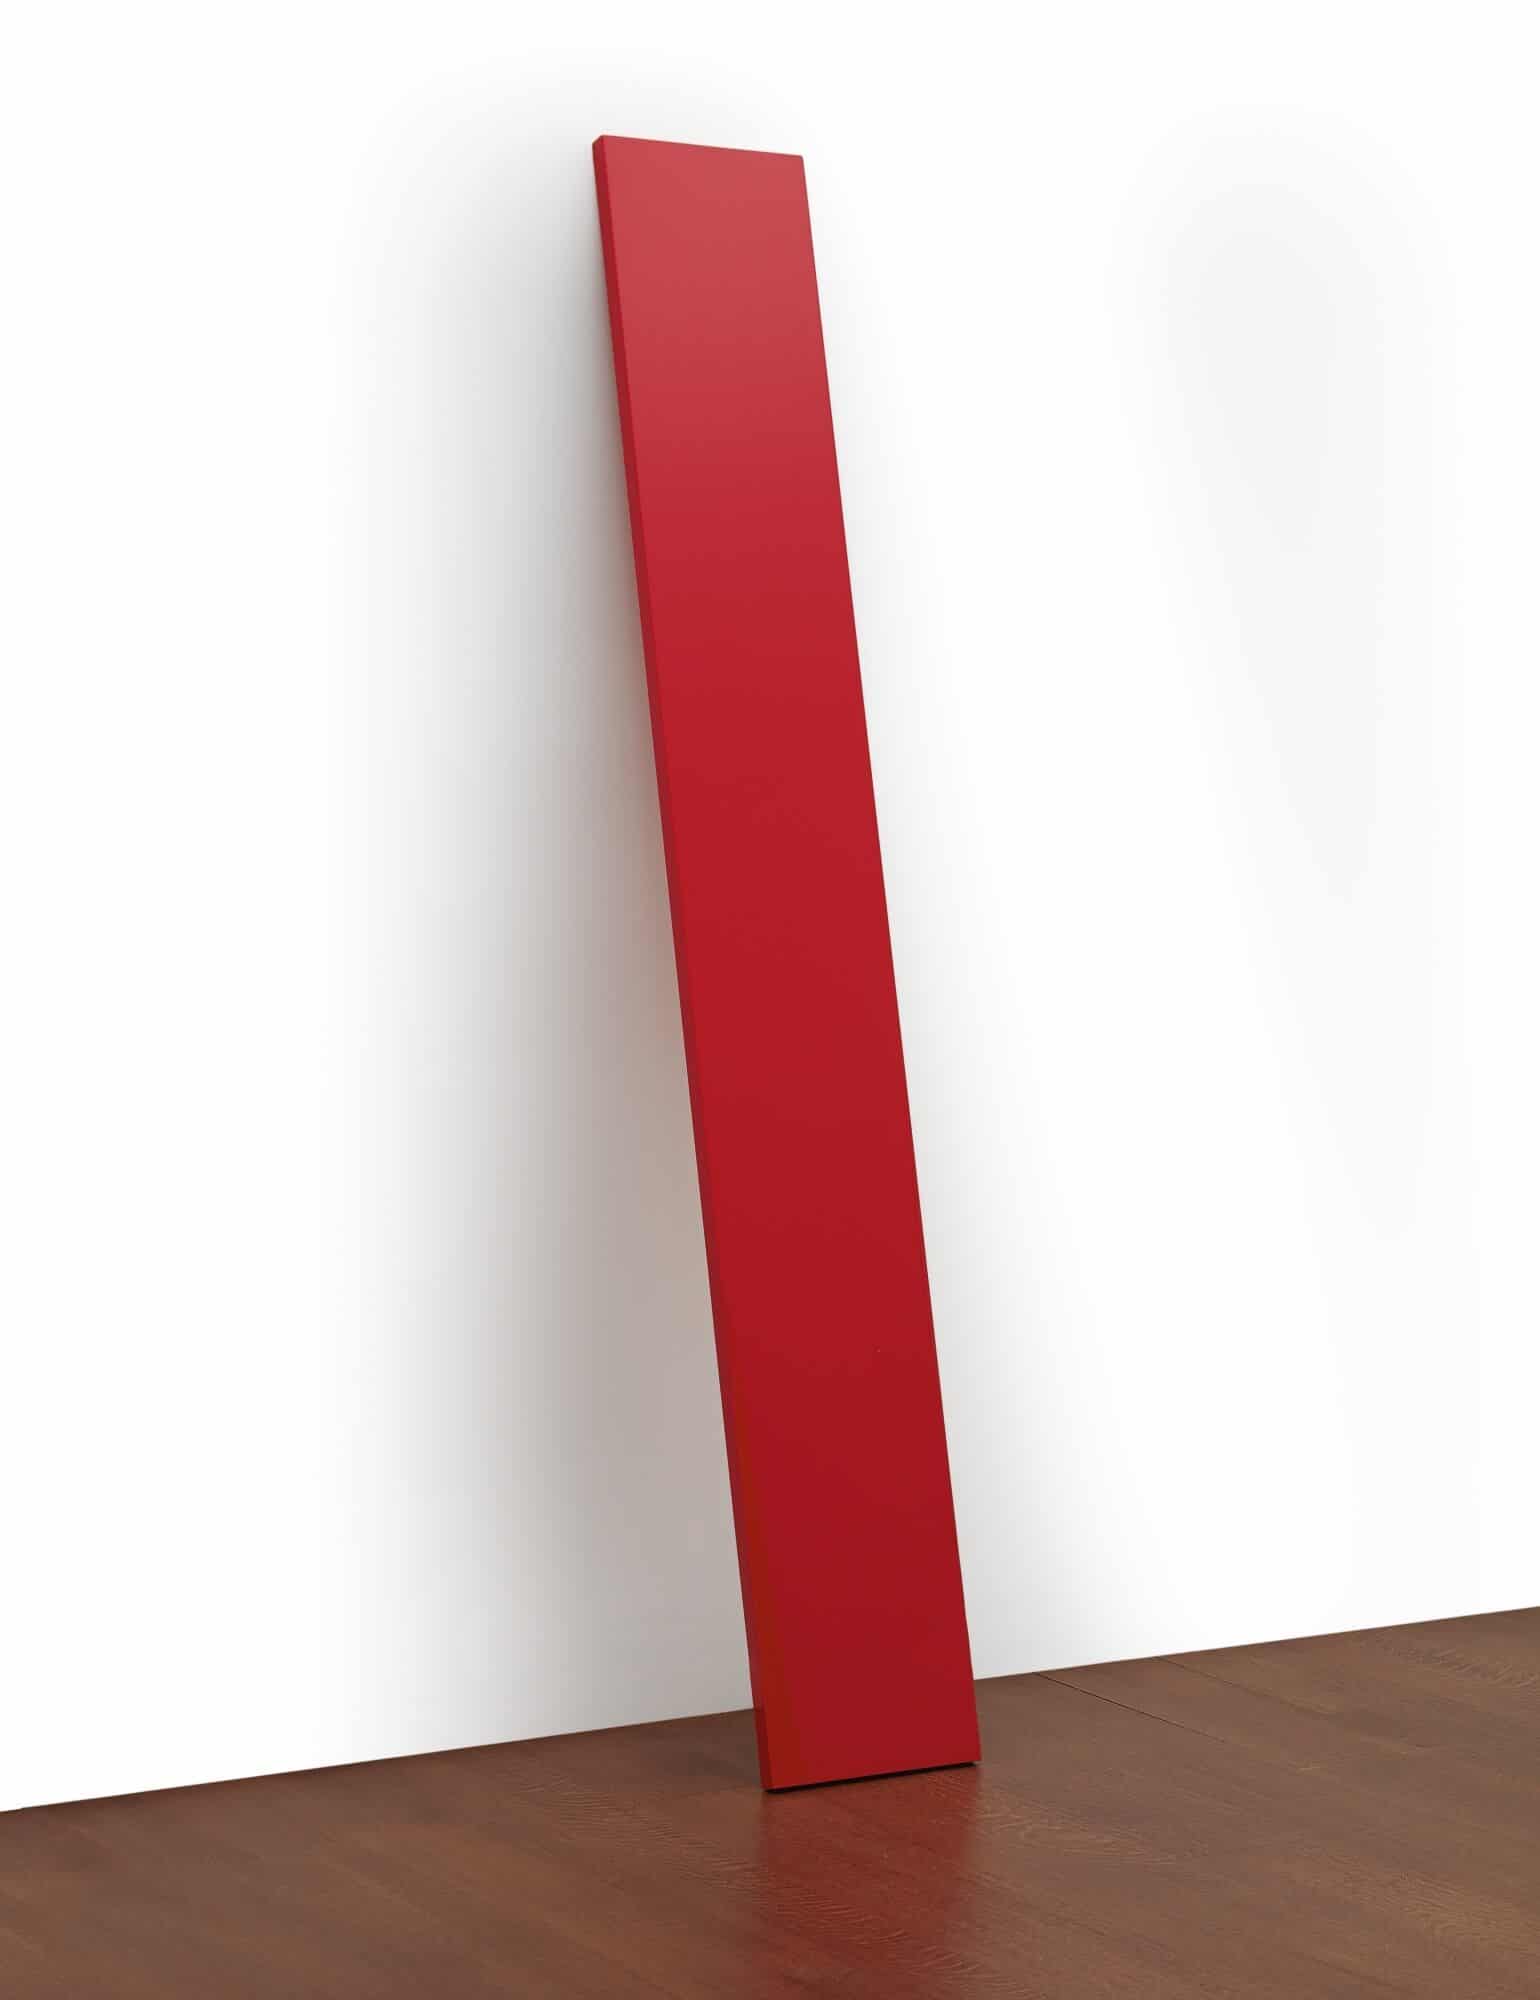 John McCracken - Untitled (Red plank)